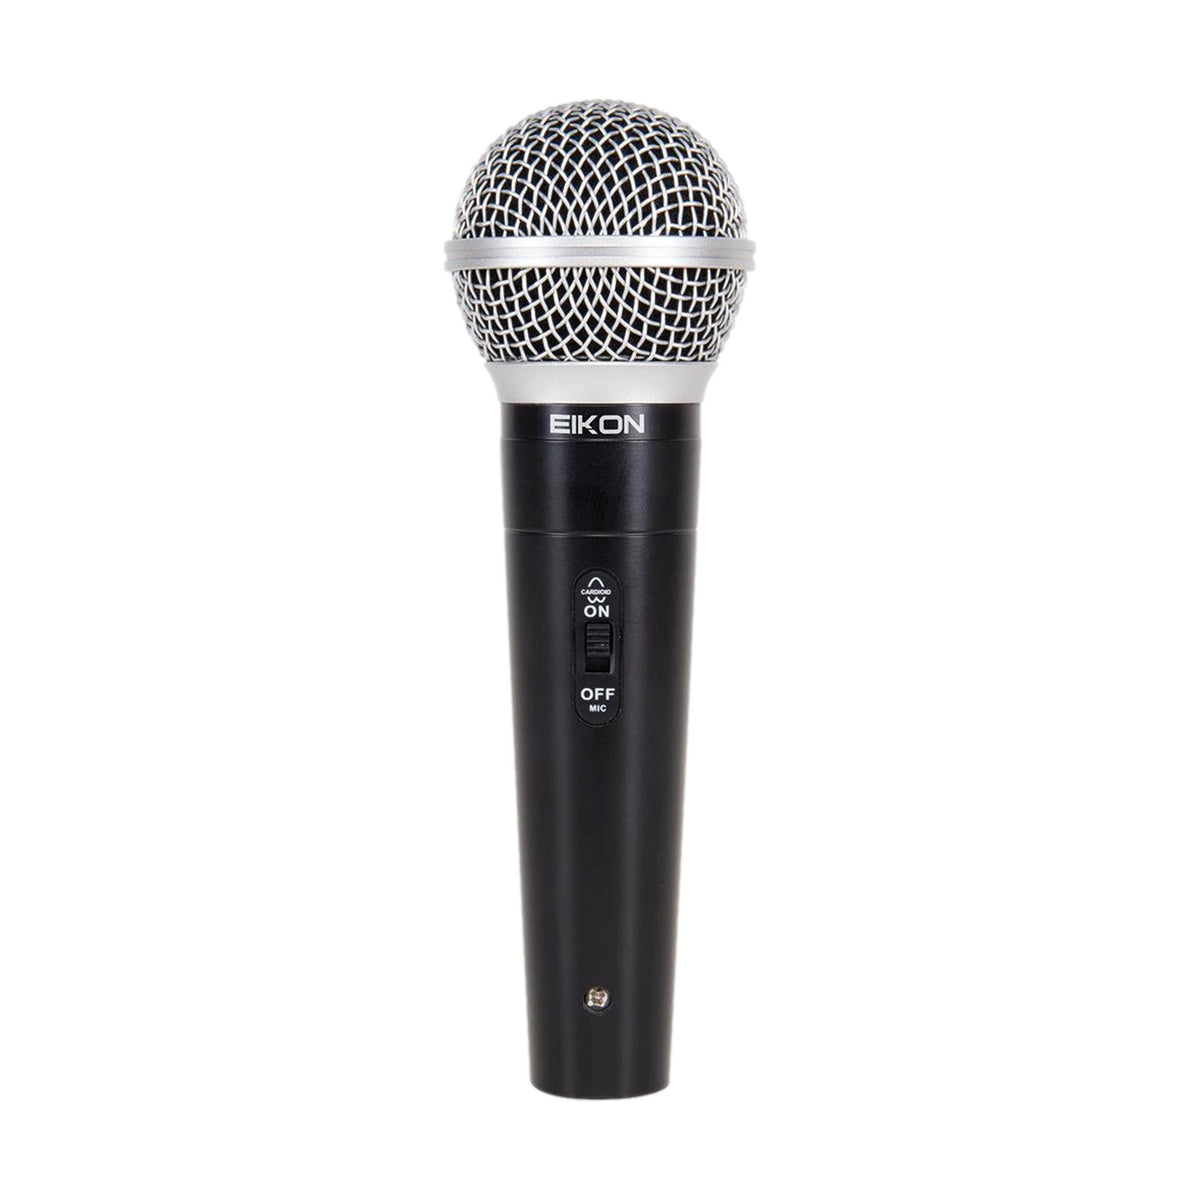 Eikon Vocal Dynamic Microphone DM580LC